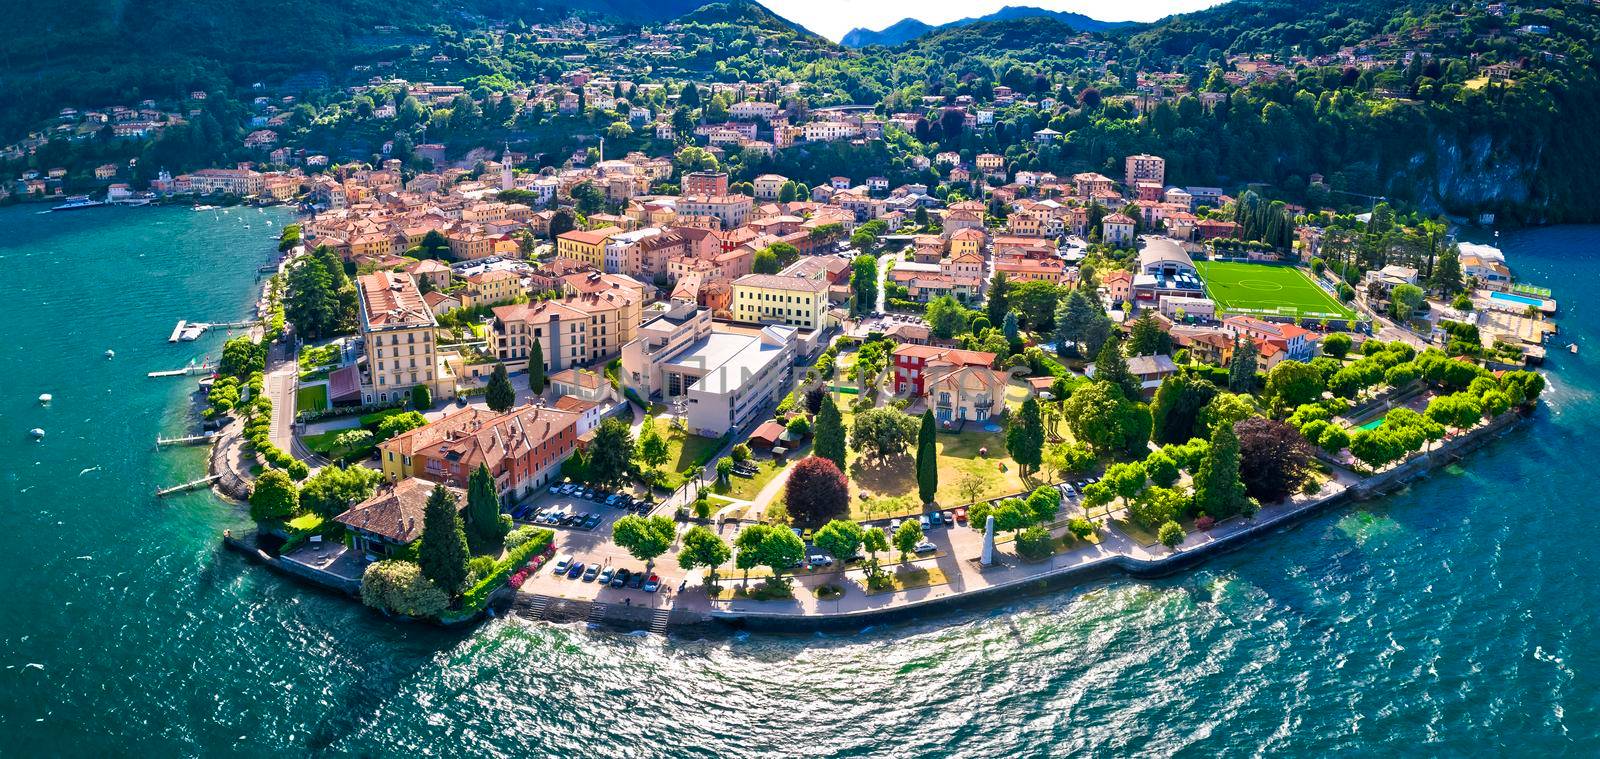 Menaggio, Como Lake. Panoramic aerial view of town of Menaggio on Como Lake, Lombardy region of Italy